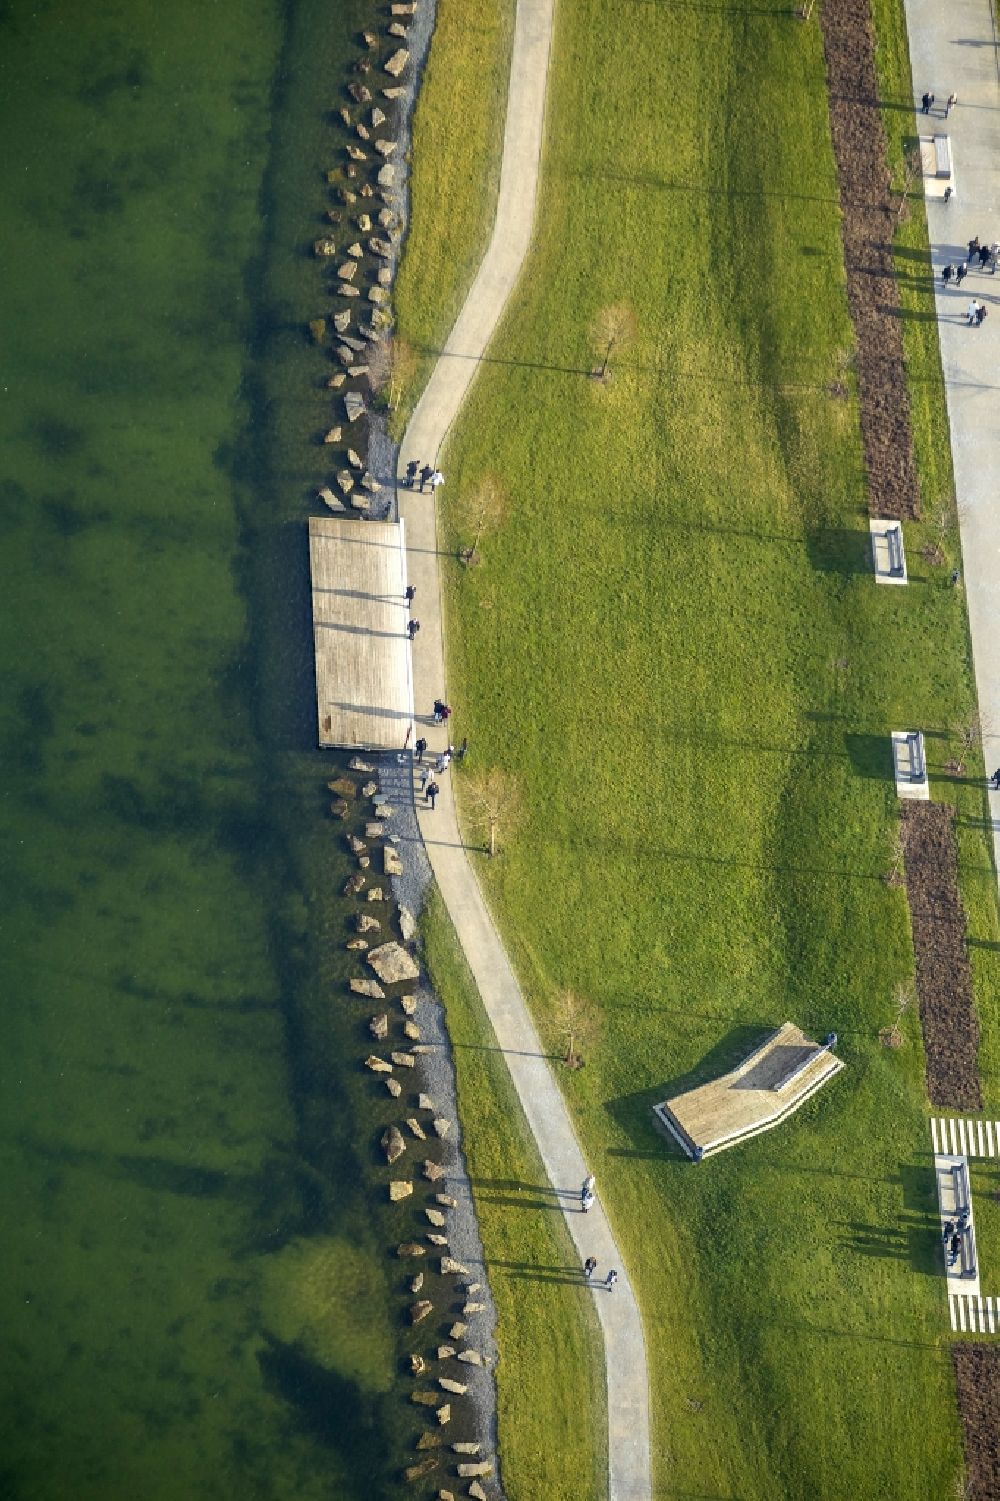 Aerial image Dortmund - Promenade for walking and hiking path on the banks of Phoenix Lake in Dortmund in North Rhine-Westphalia